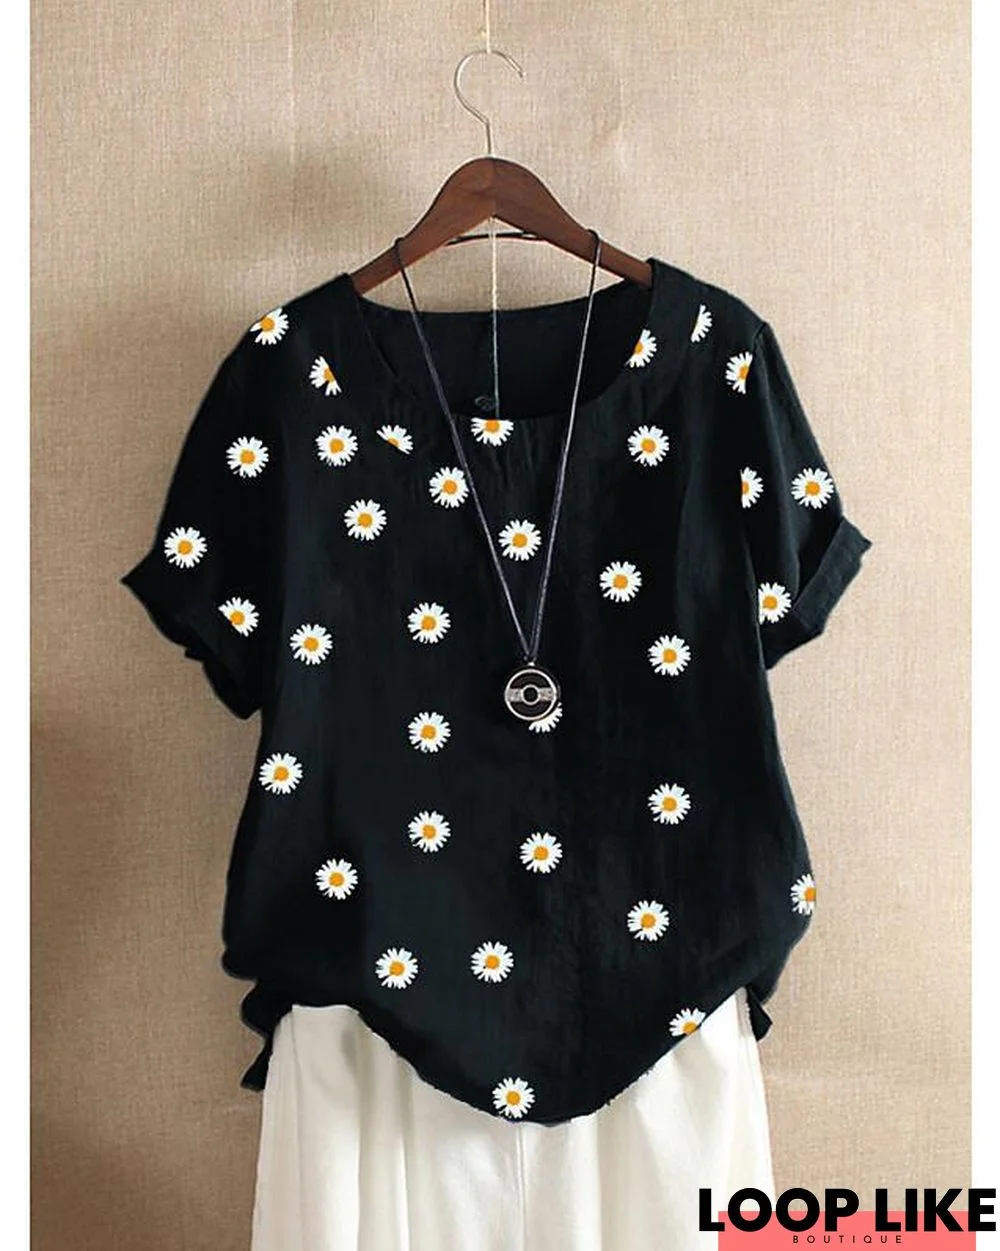 Women's Blouse Shirt Floral Flower Daisy Print Round Neck Tops Loose Cotton Basic Top Black Wine Orange